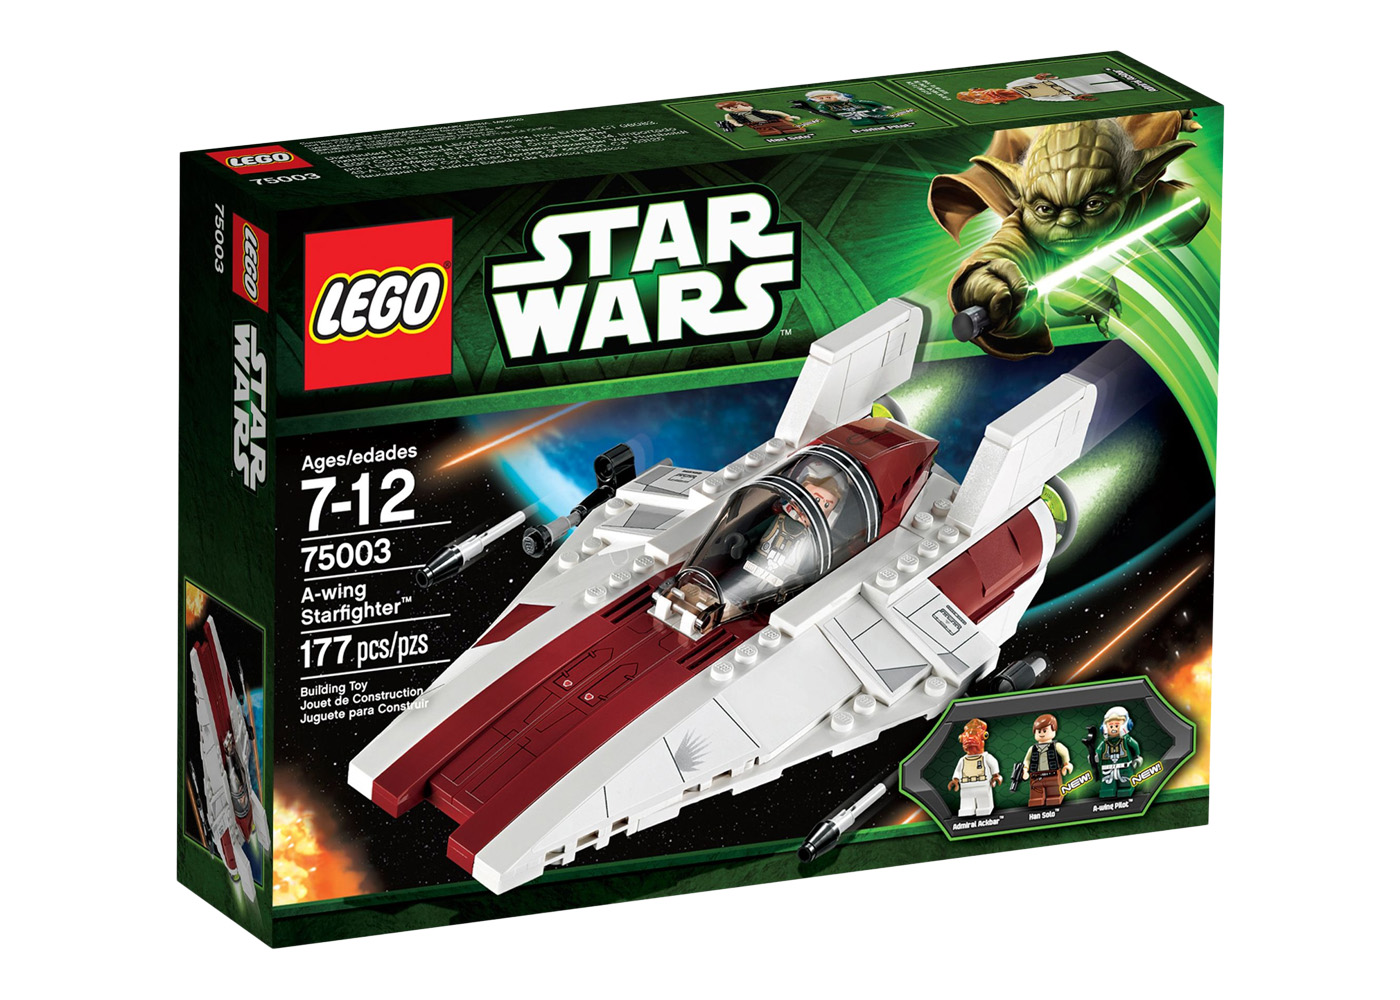 LEGO Star Wars A-wing Starfighter Set 75175 - JP